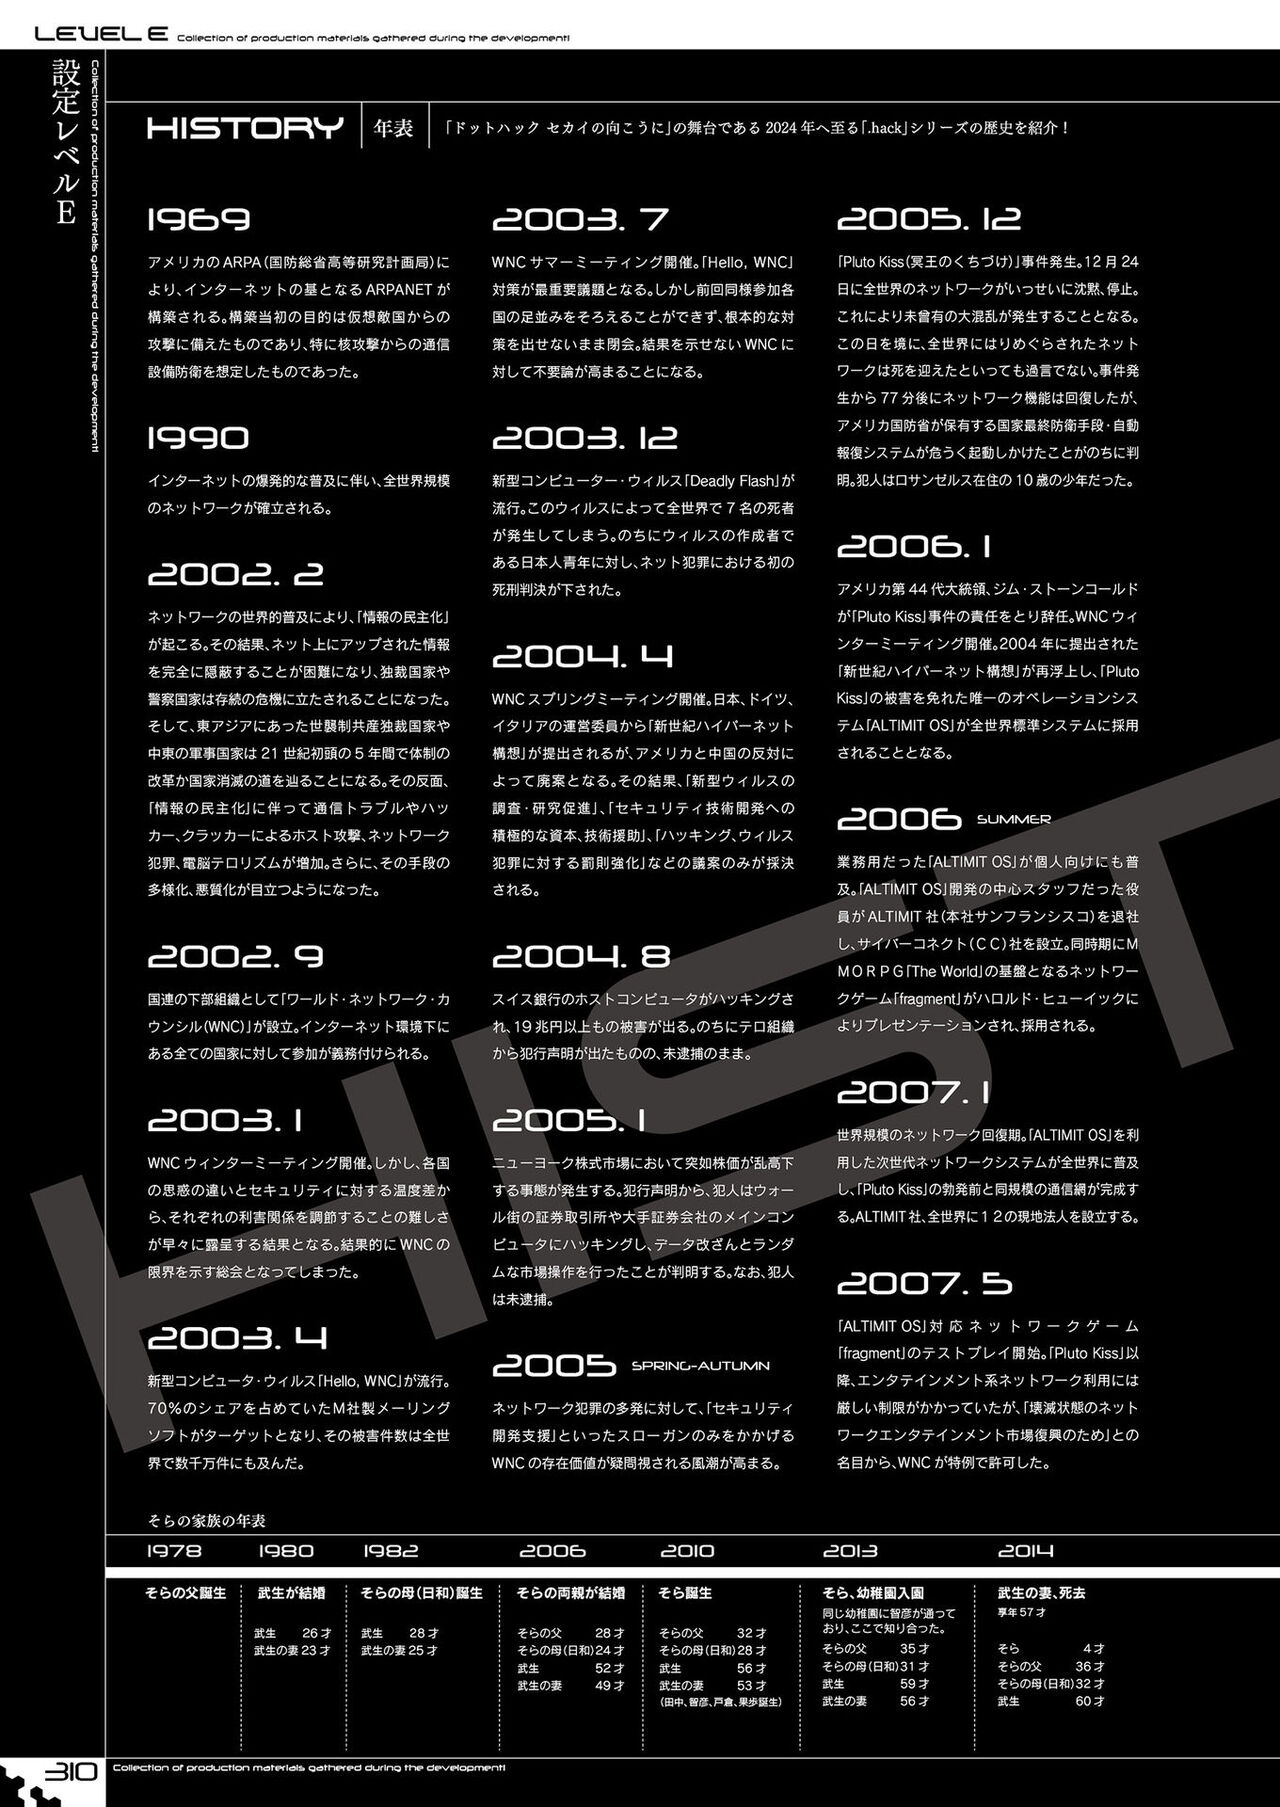 Dot Hack Sekai-no Muko ni  +Versus Complete Set  Documentation .hack //Archives _ 05 312